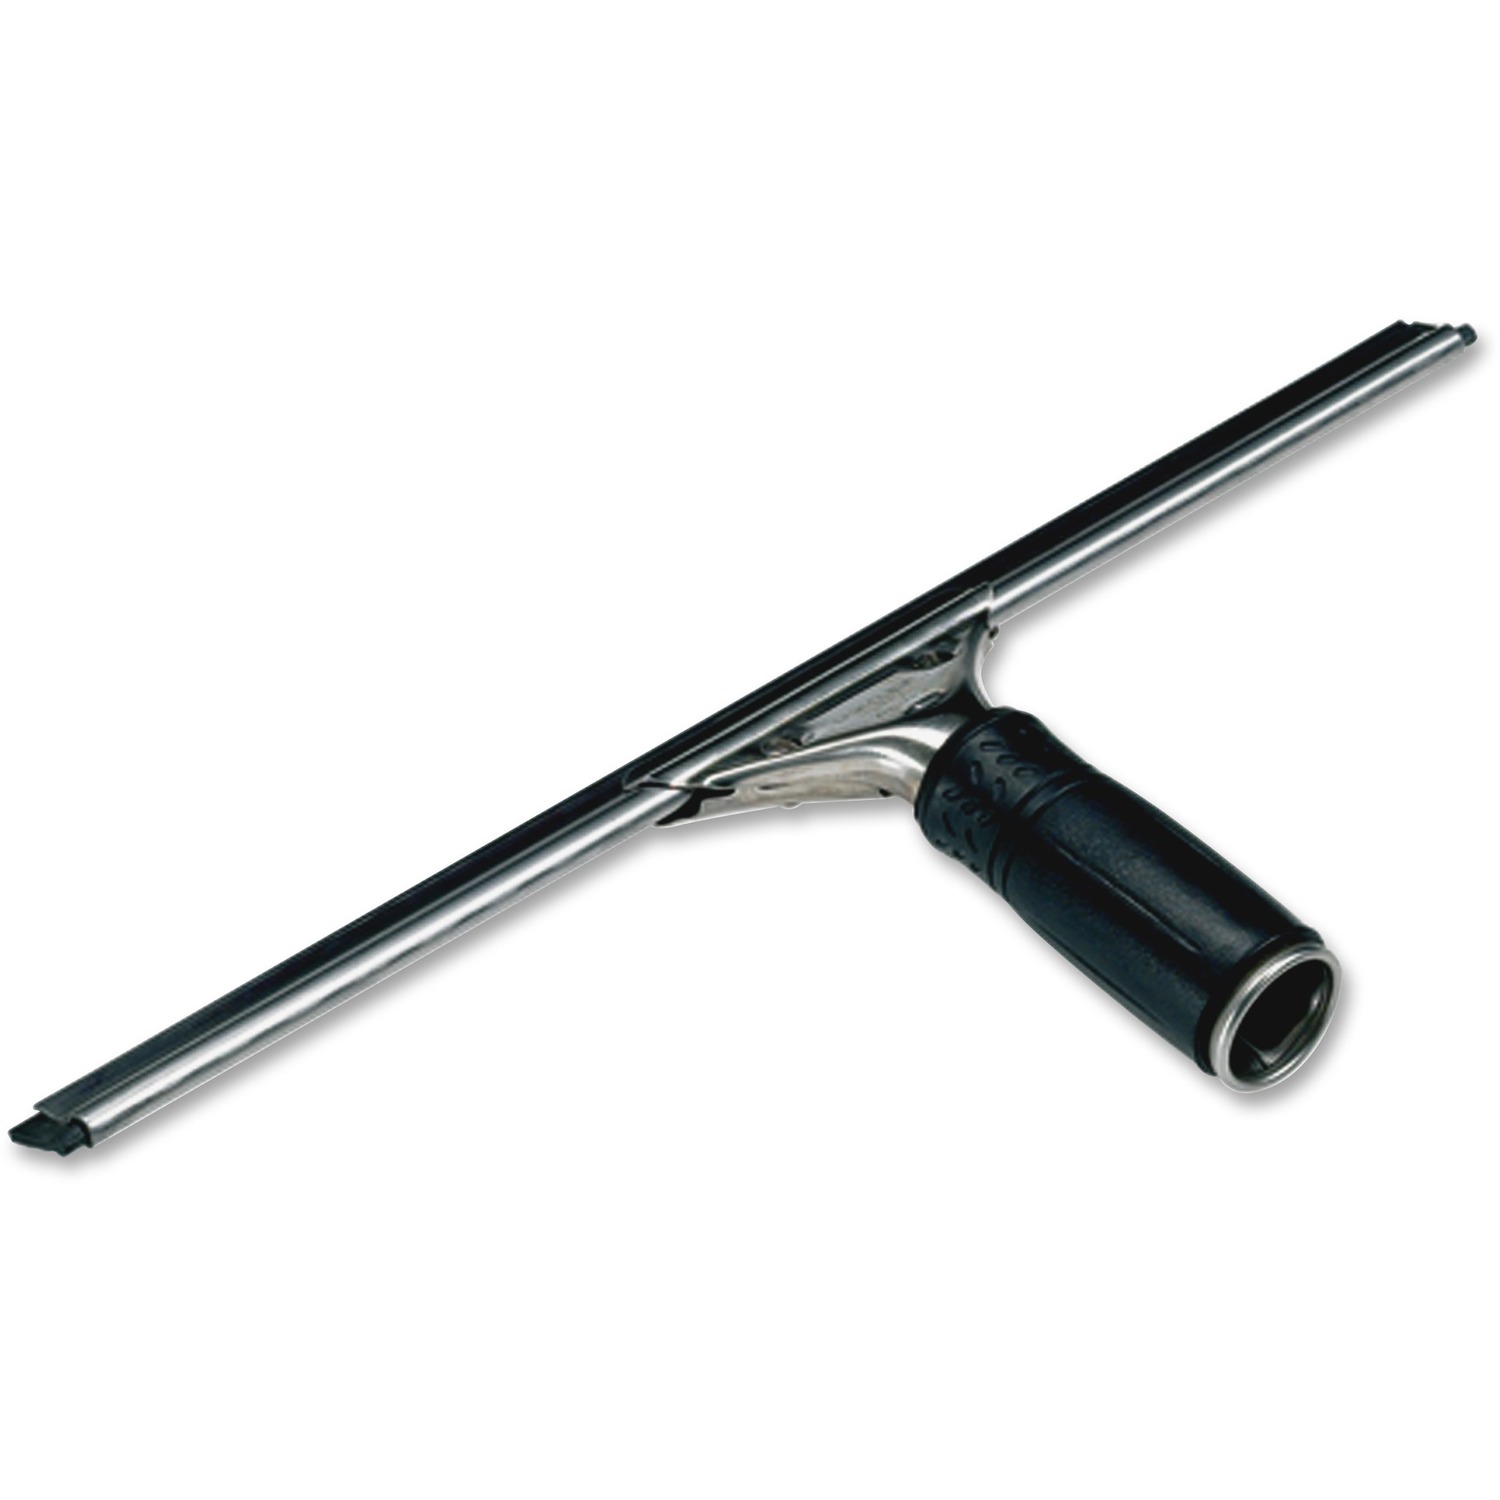 Pro Stainless Steel Window Squeegee, 14" Wide Blade